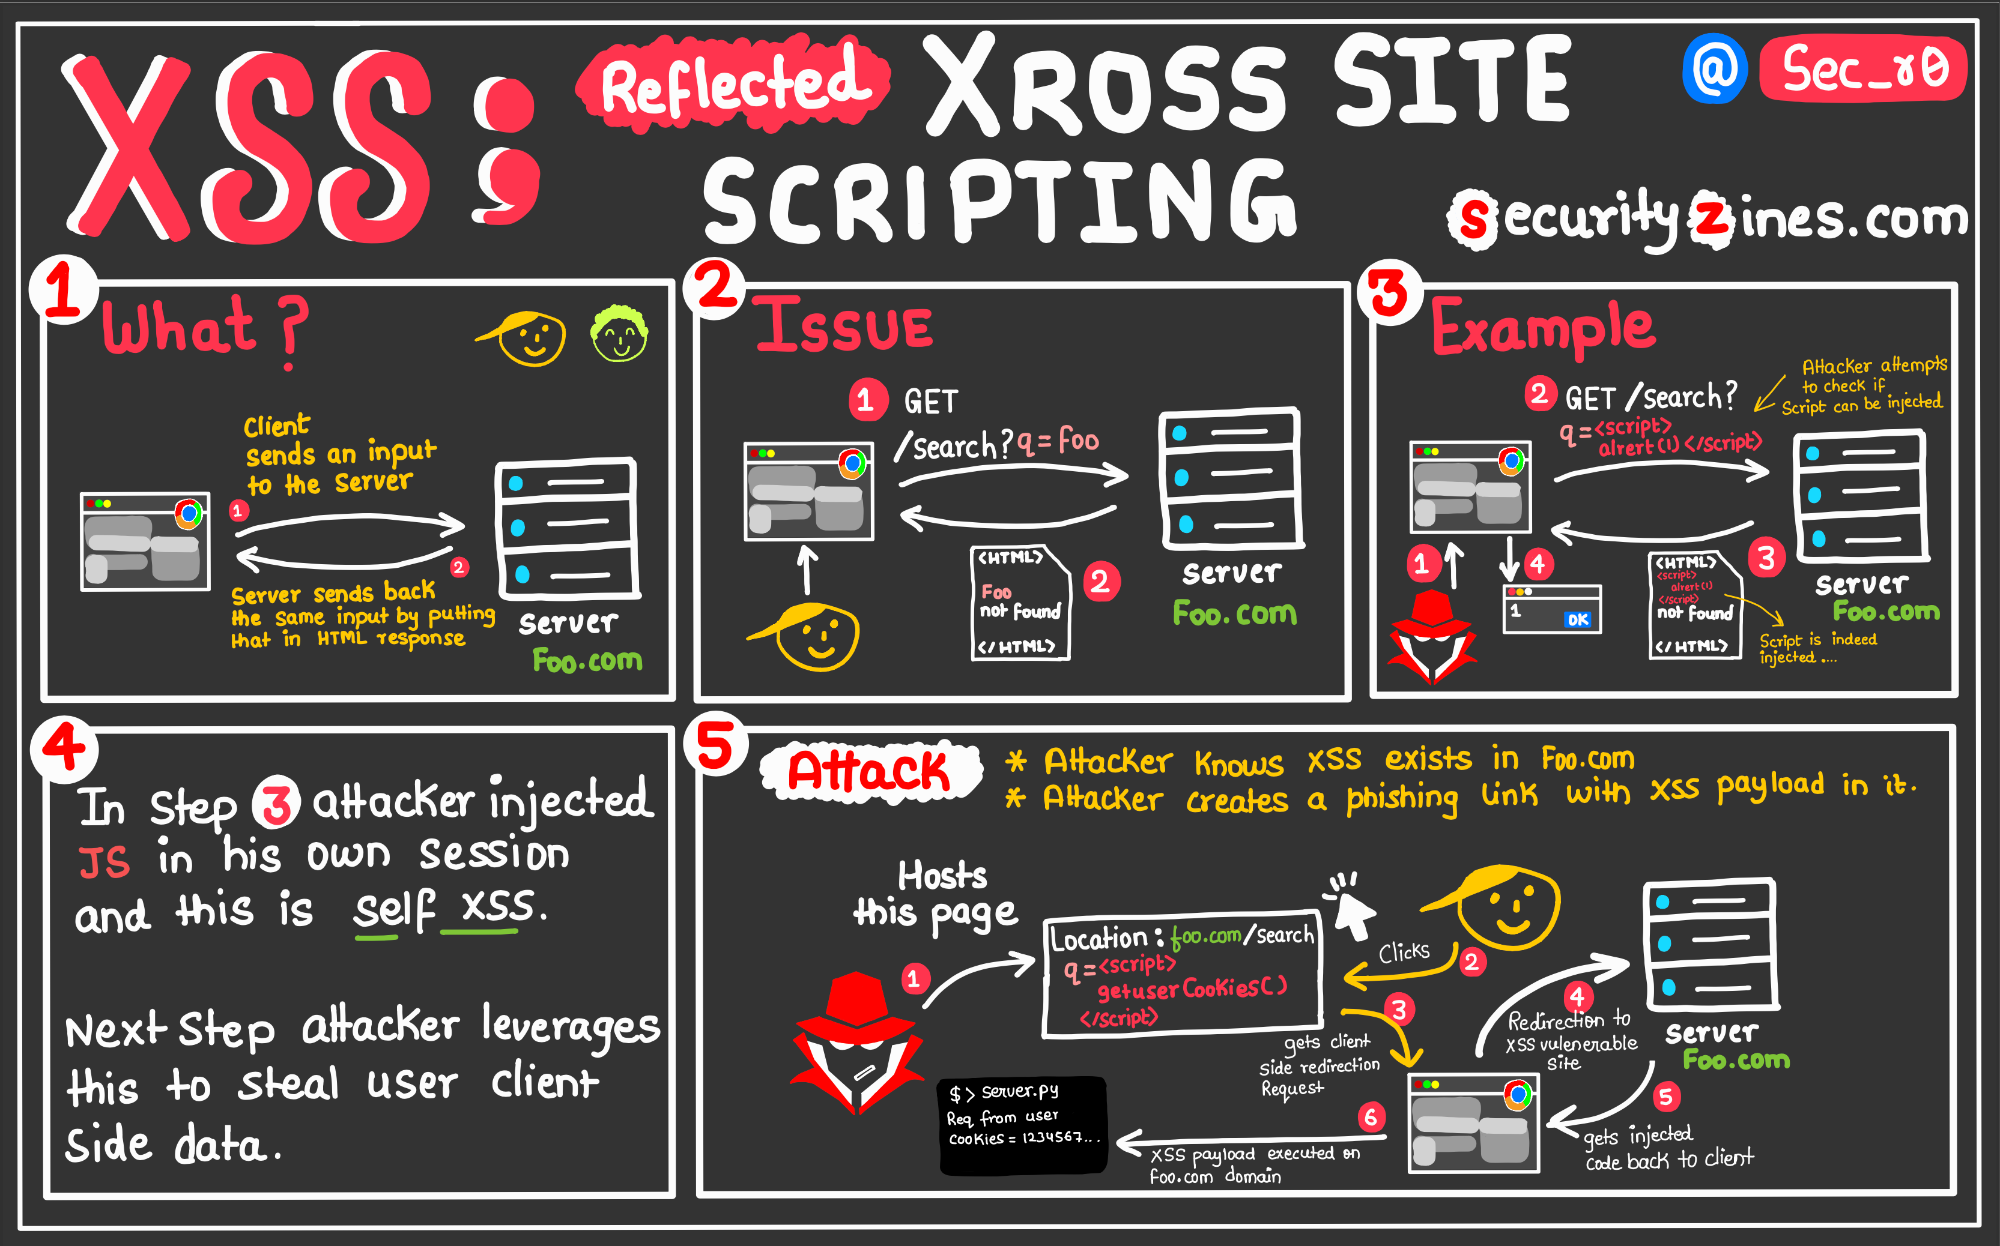 Cross site scripting. Reflected XSS. Межсайтовый скриптинг XSS. Reflected XSS пример. Cross-site Scripting (XSS).